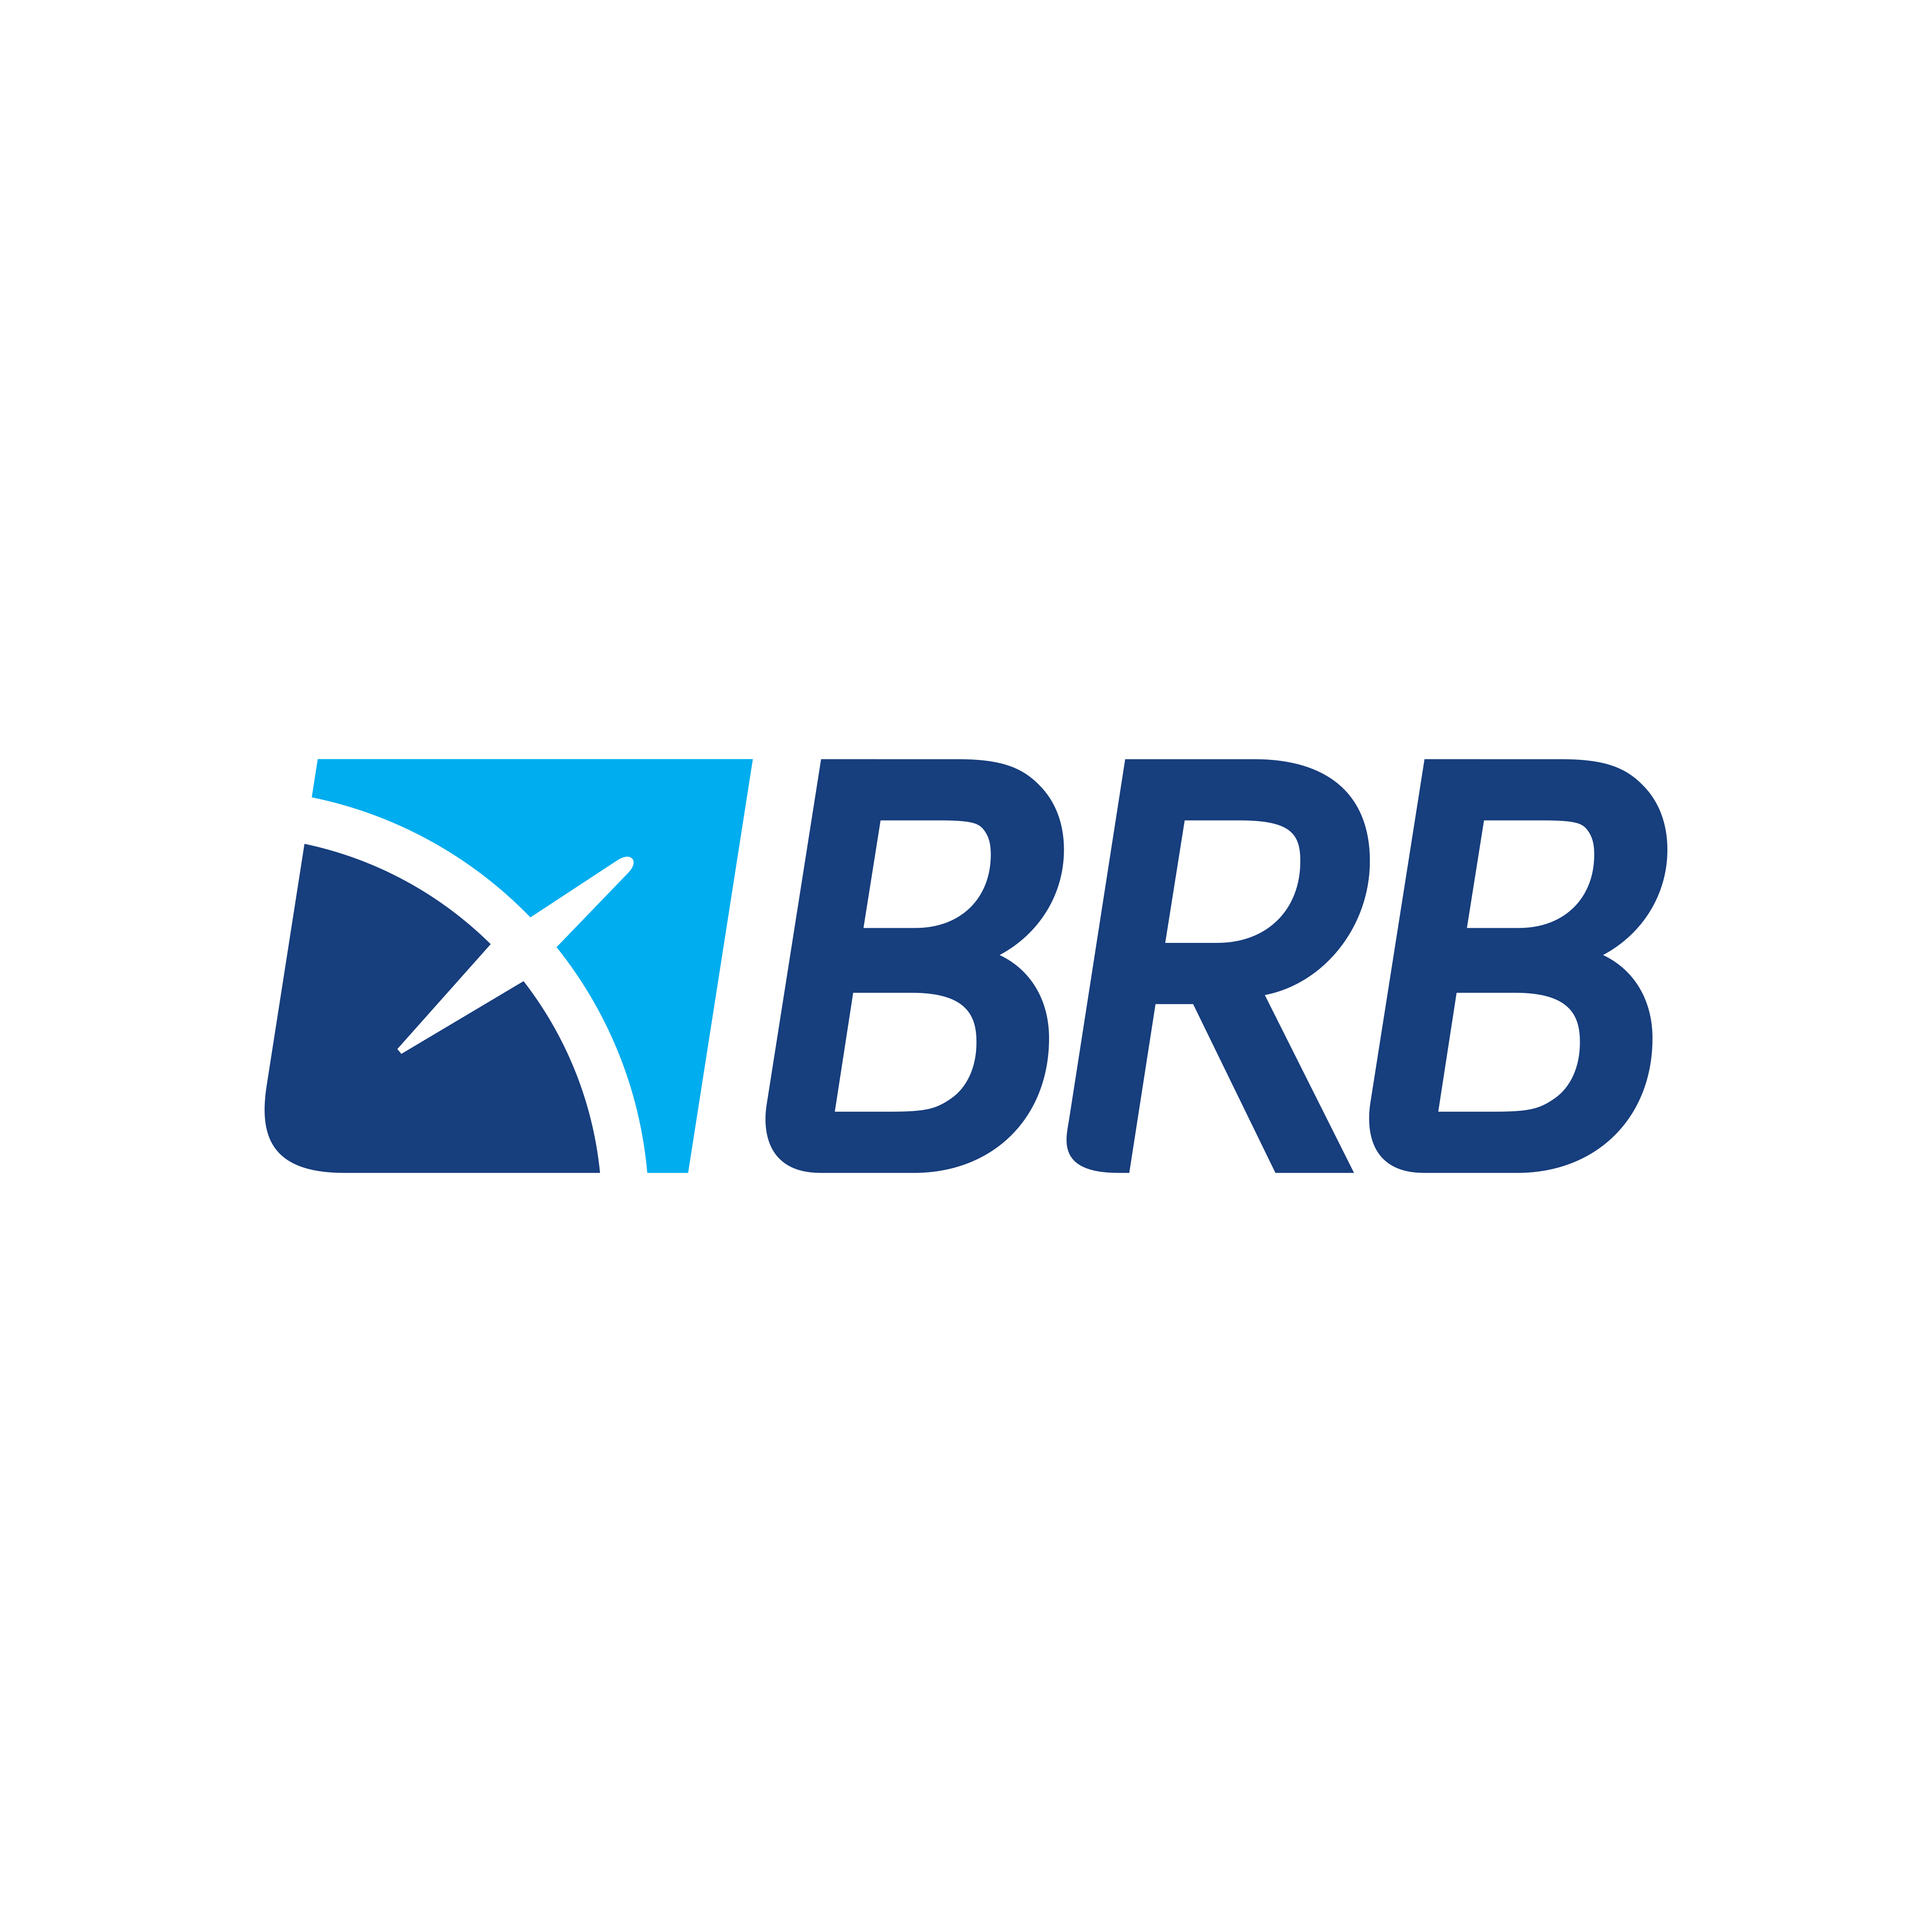 BRB Logo - Banco de Brasília Logo - PNG e Vetor - Download ...